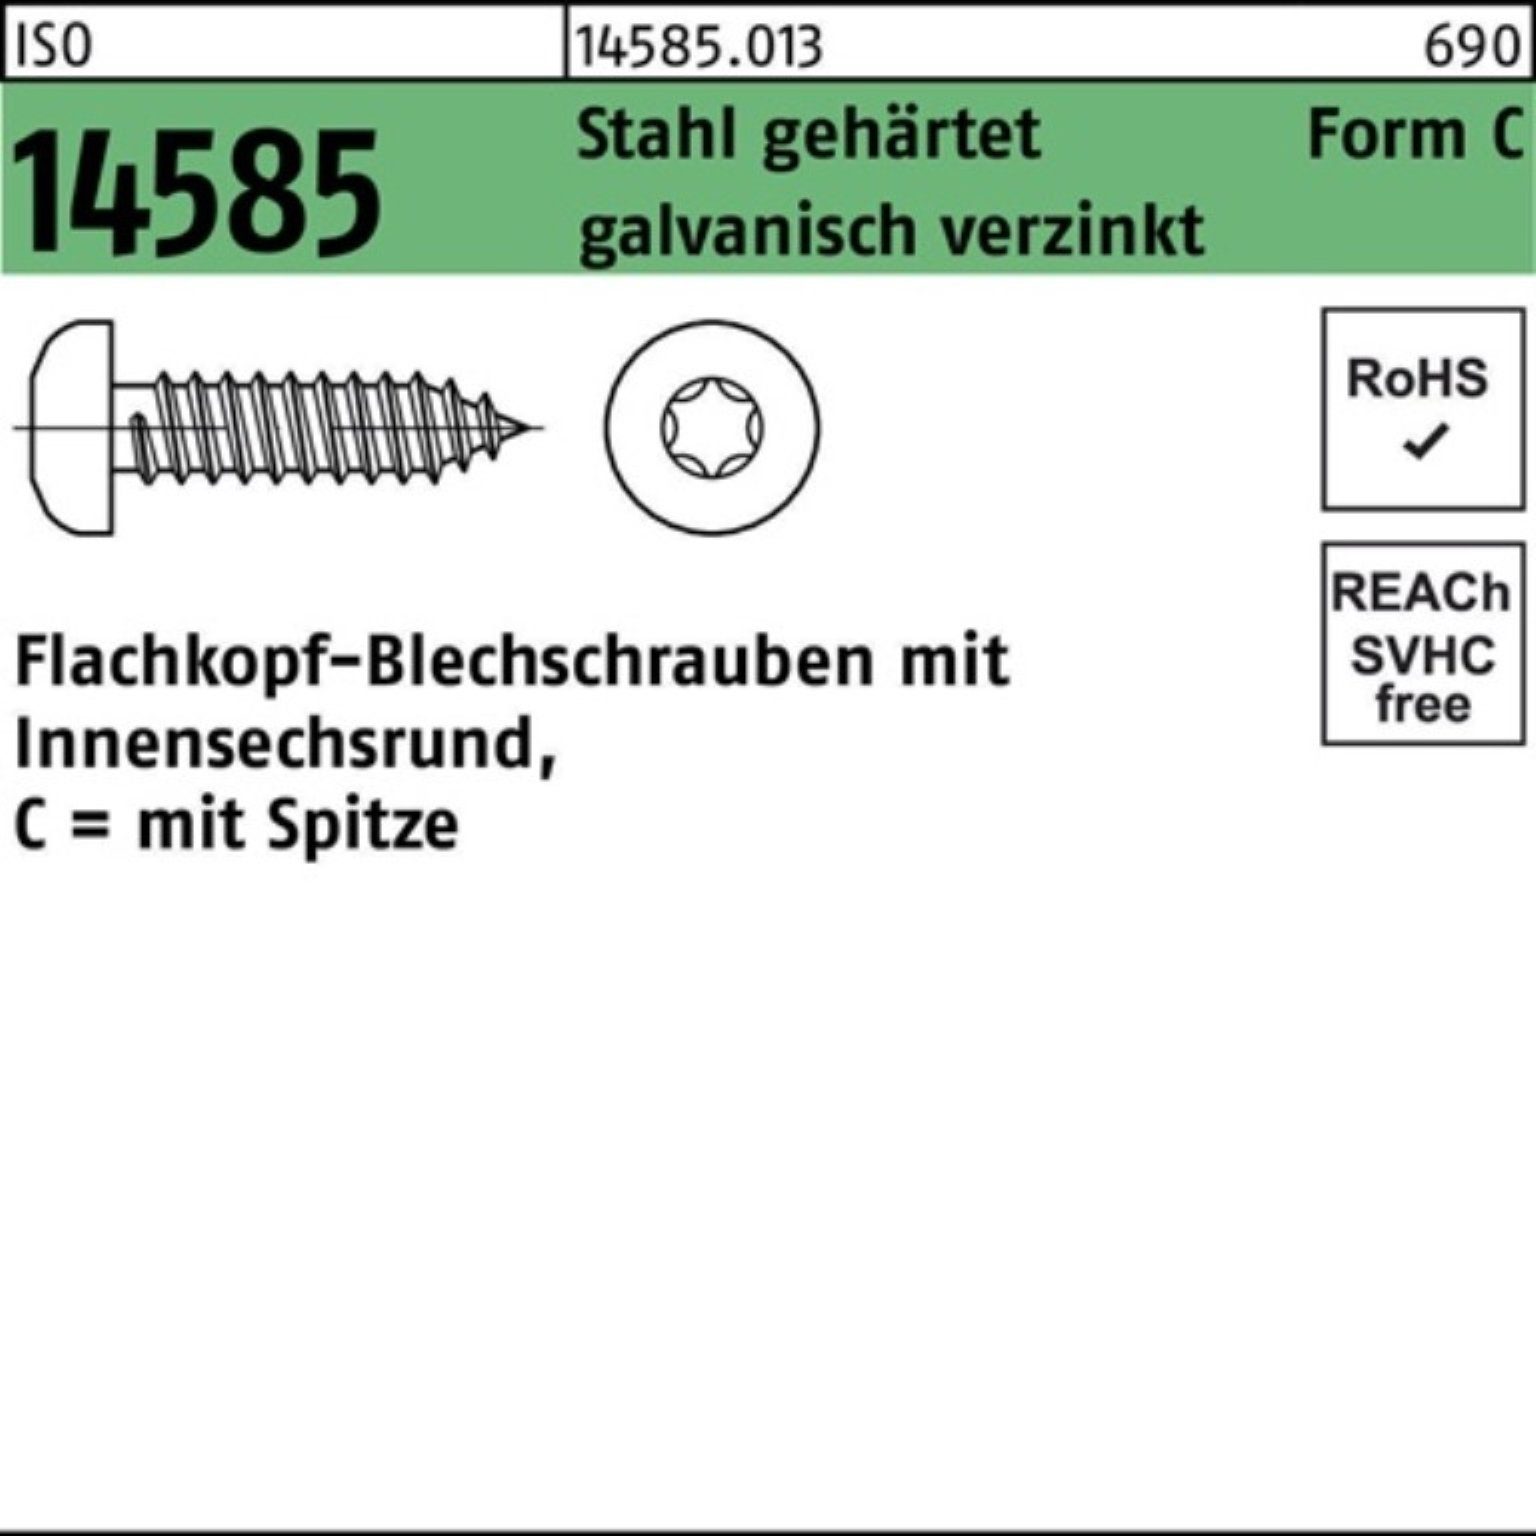 Blechschraube 14585 geh. 500er ISO -C-T20 Reyher ISR/Spitze Pack Stahl 4,2x22 Blechschraube